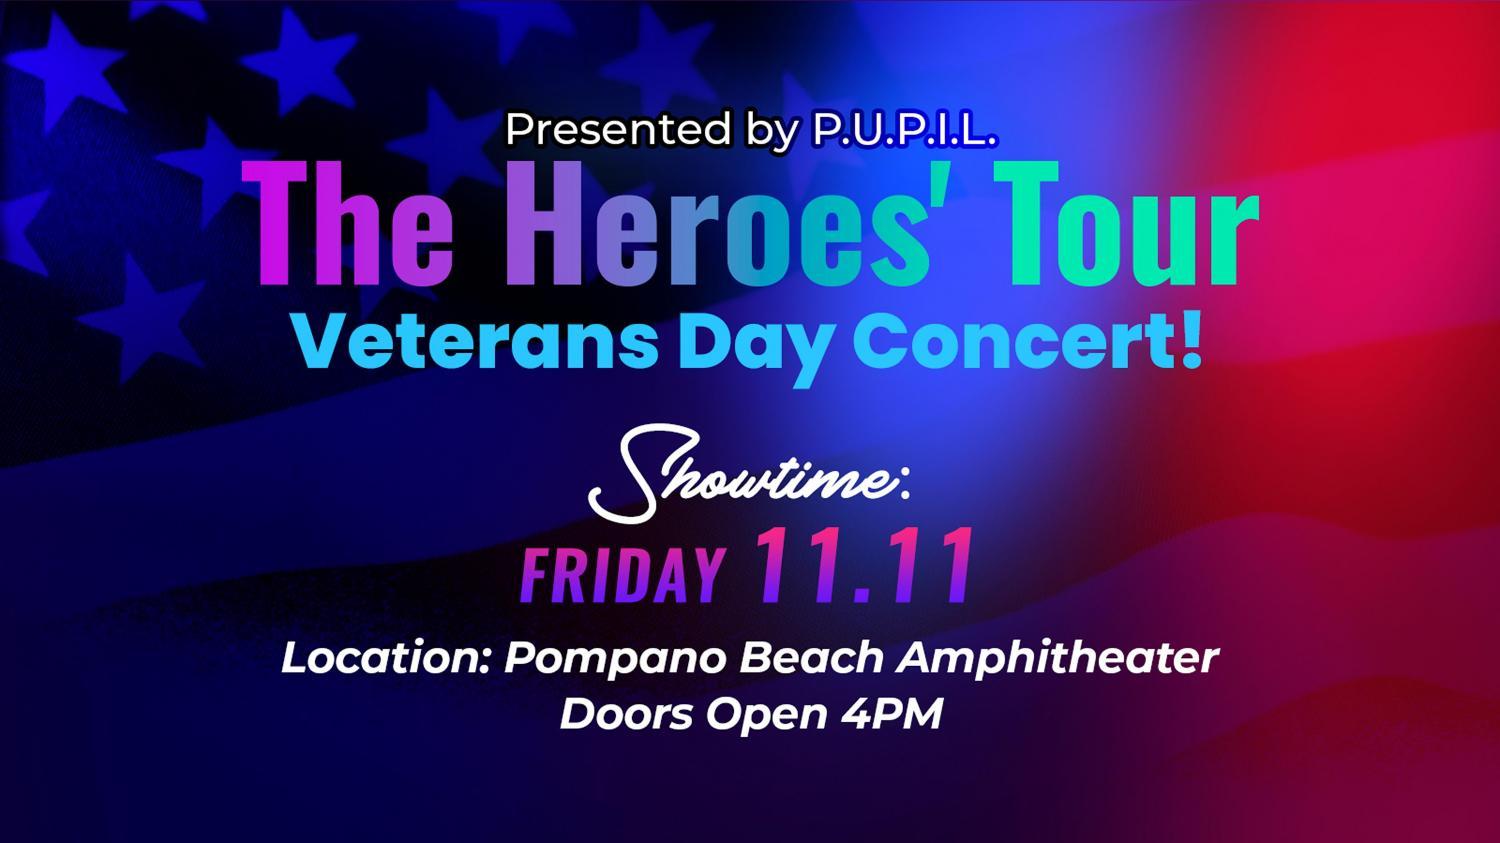 P.U.P.I.L. Presents the Heroes Tour Veterans Day Concert
Fri Nov 11, 7:00 PM - Fri Nov 11, 10:00 PM
in 23 days